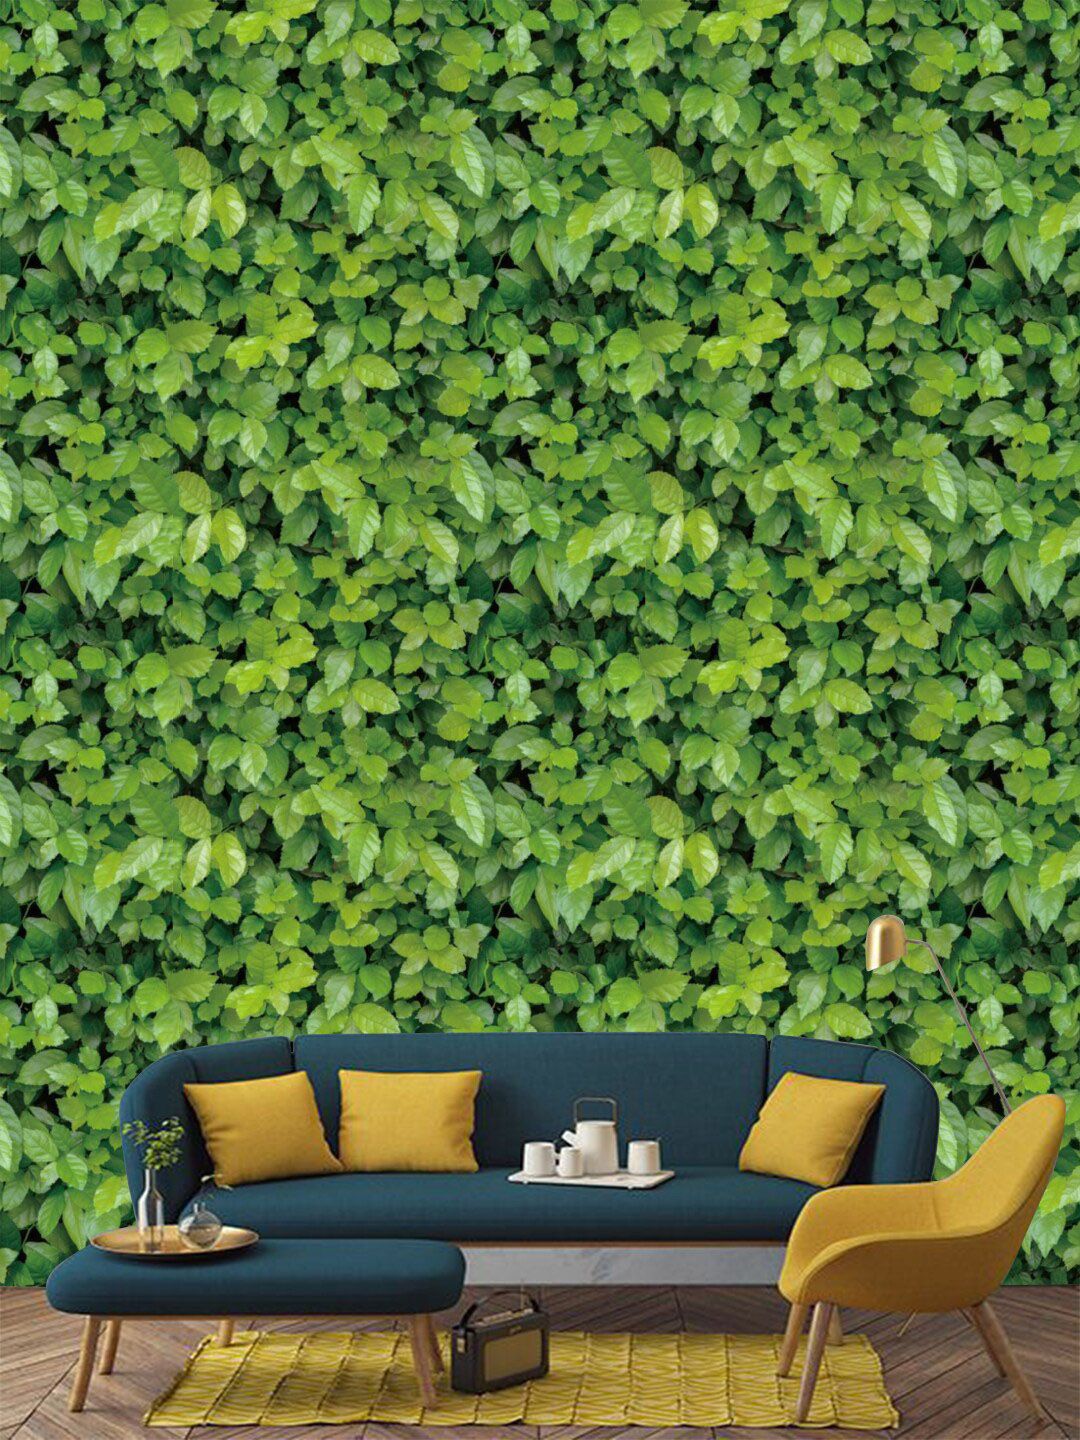 Jaamso Royals Green Leaves Printed Self Adhesive Wallpaper Price in India